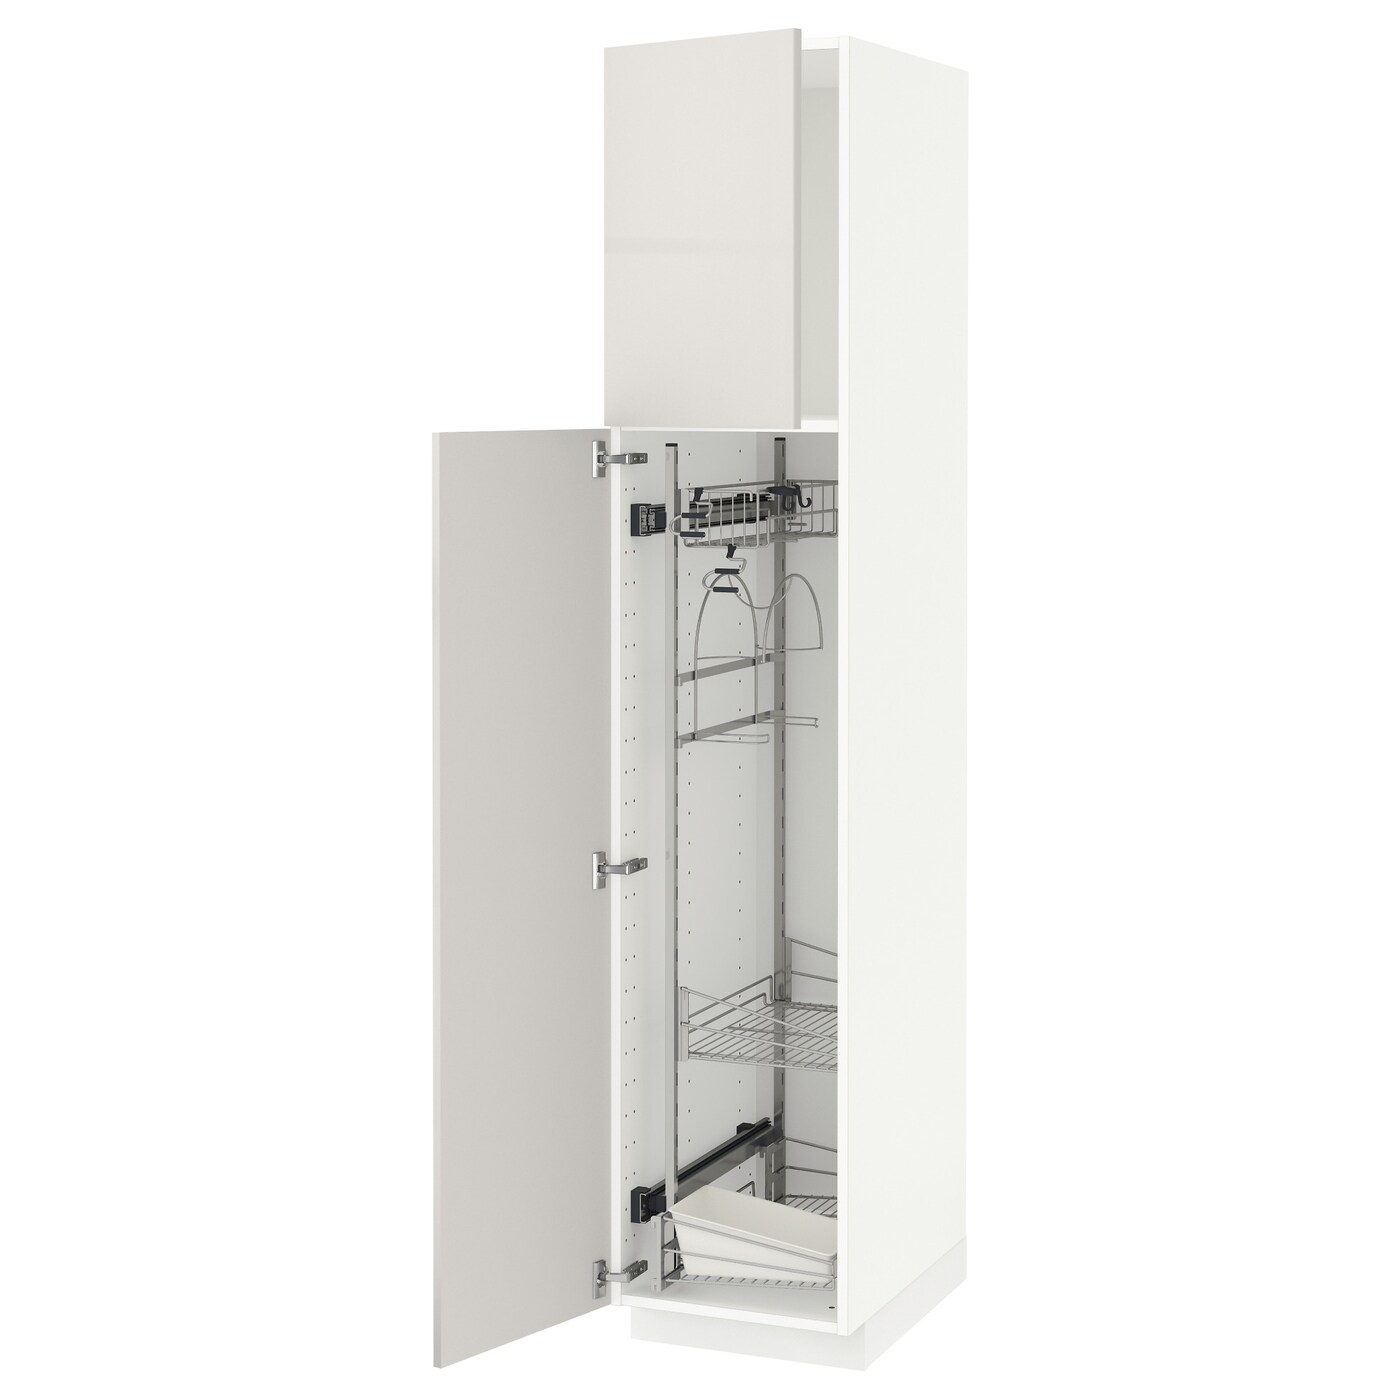 Высокий шкаф/бытовой - IKEA METOD/МЕТОД ИКЕА, 200х60х40 см, белый/светло-серый глянцевый